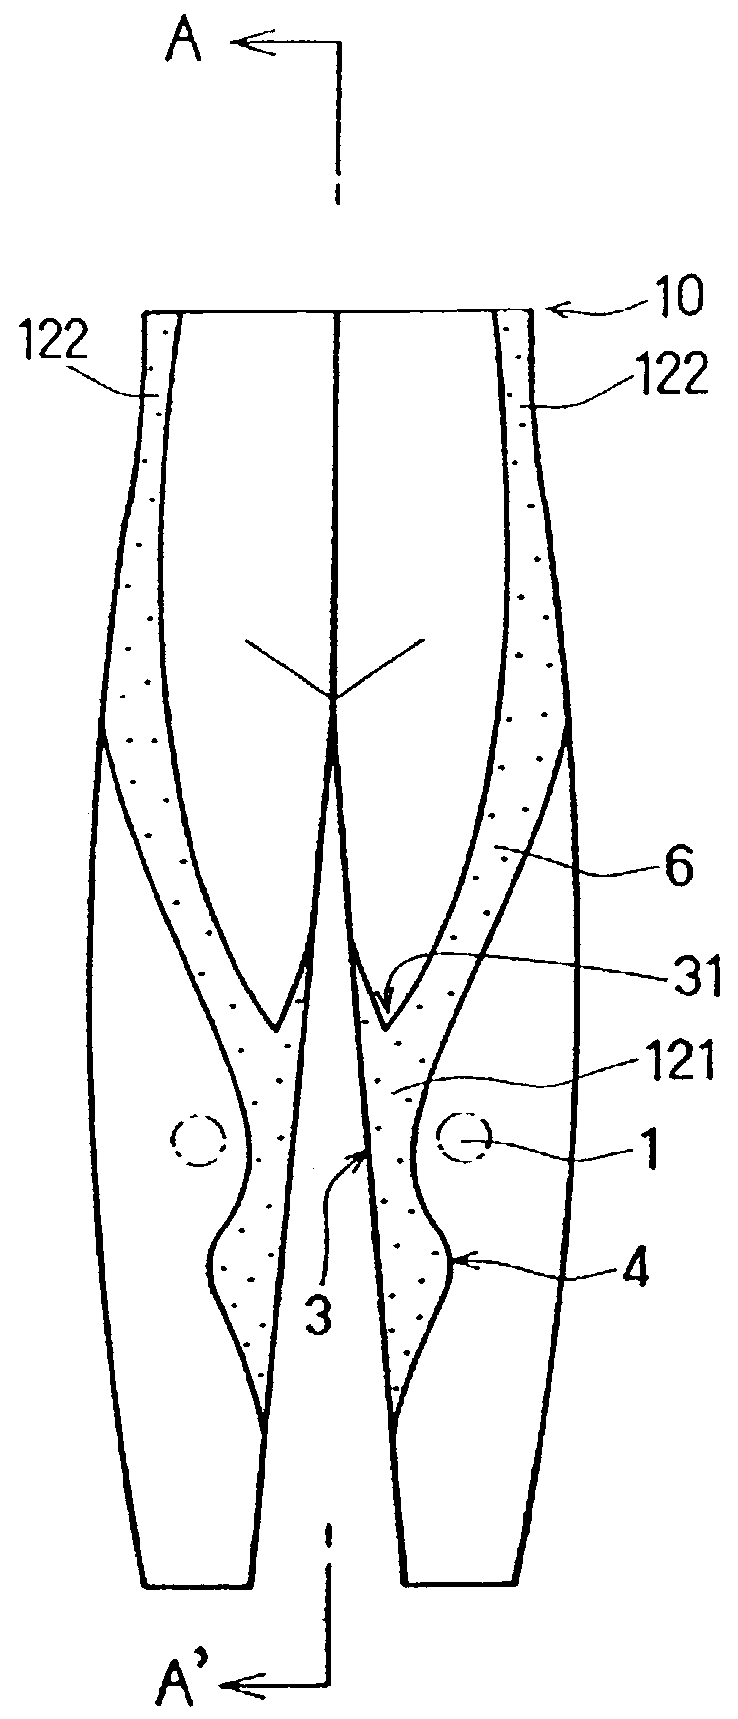 Tights-type leg support garment